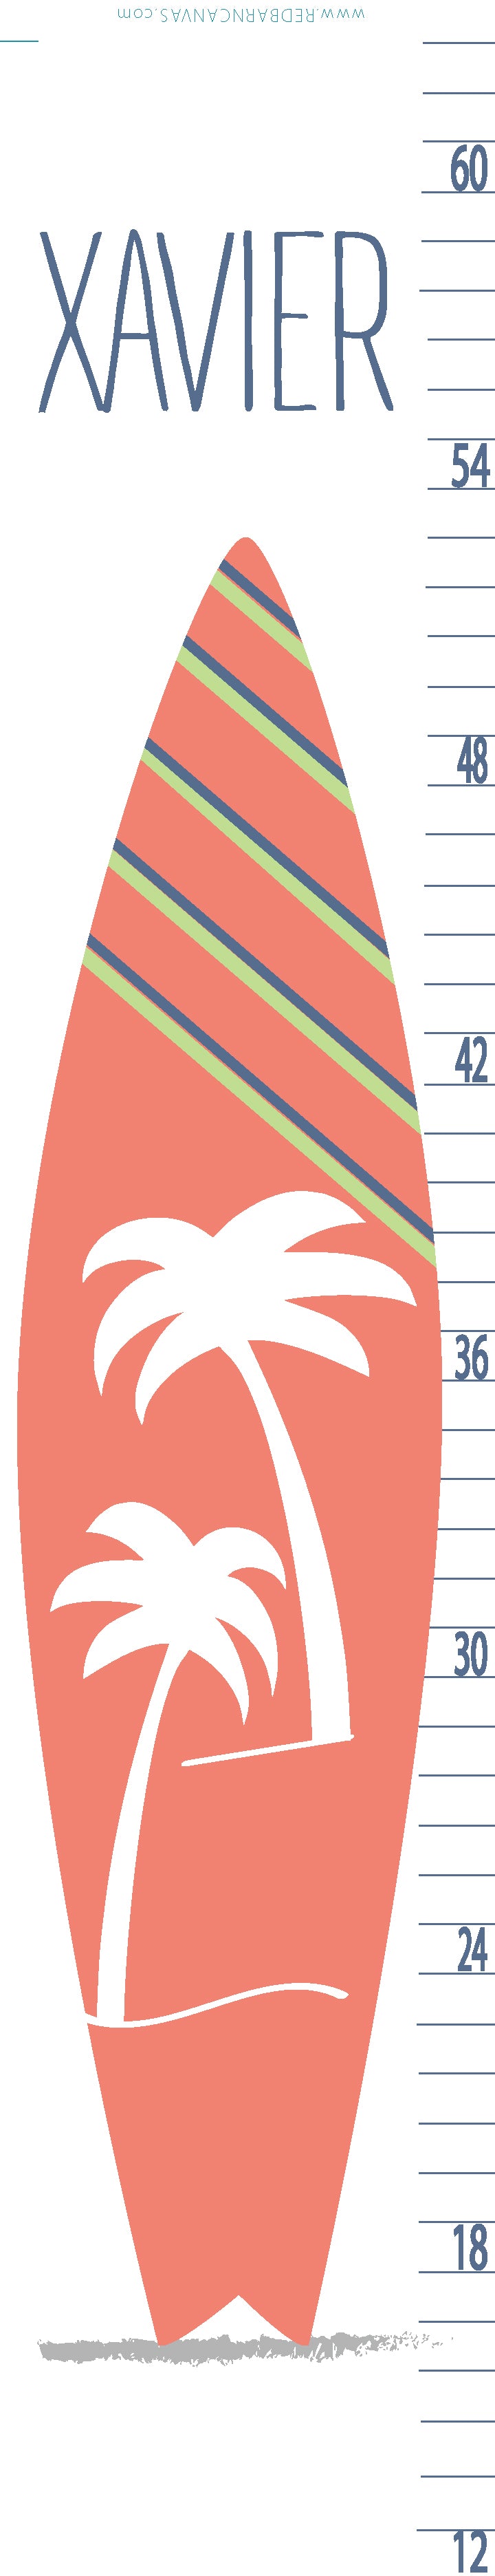 Surf Board Growth Chart